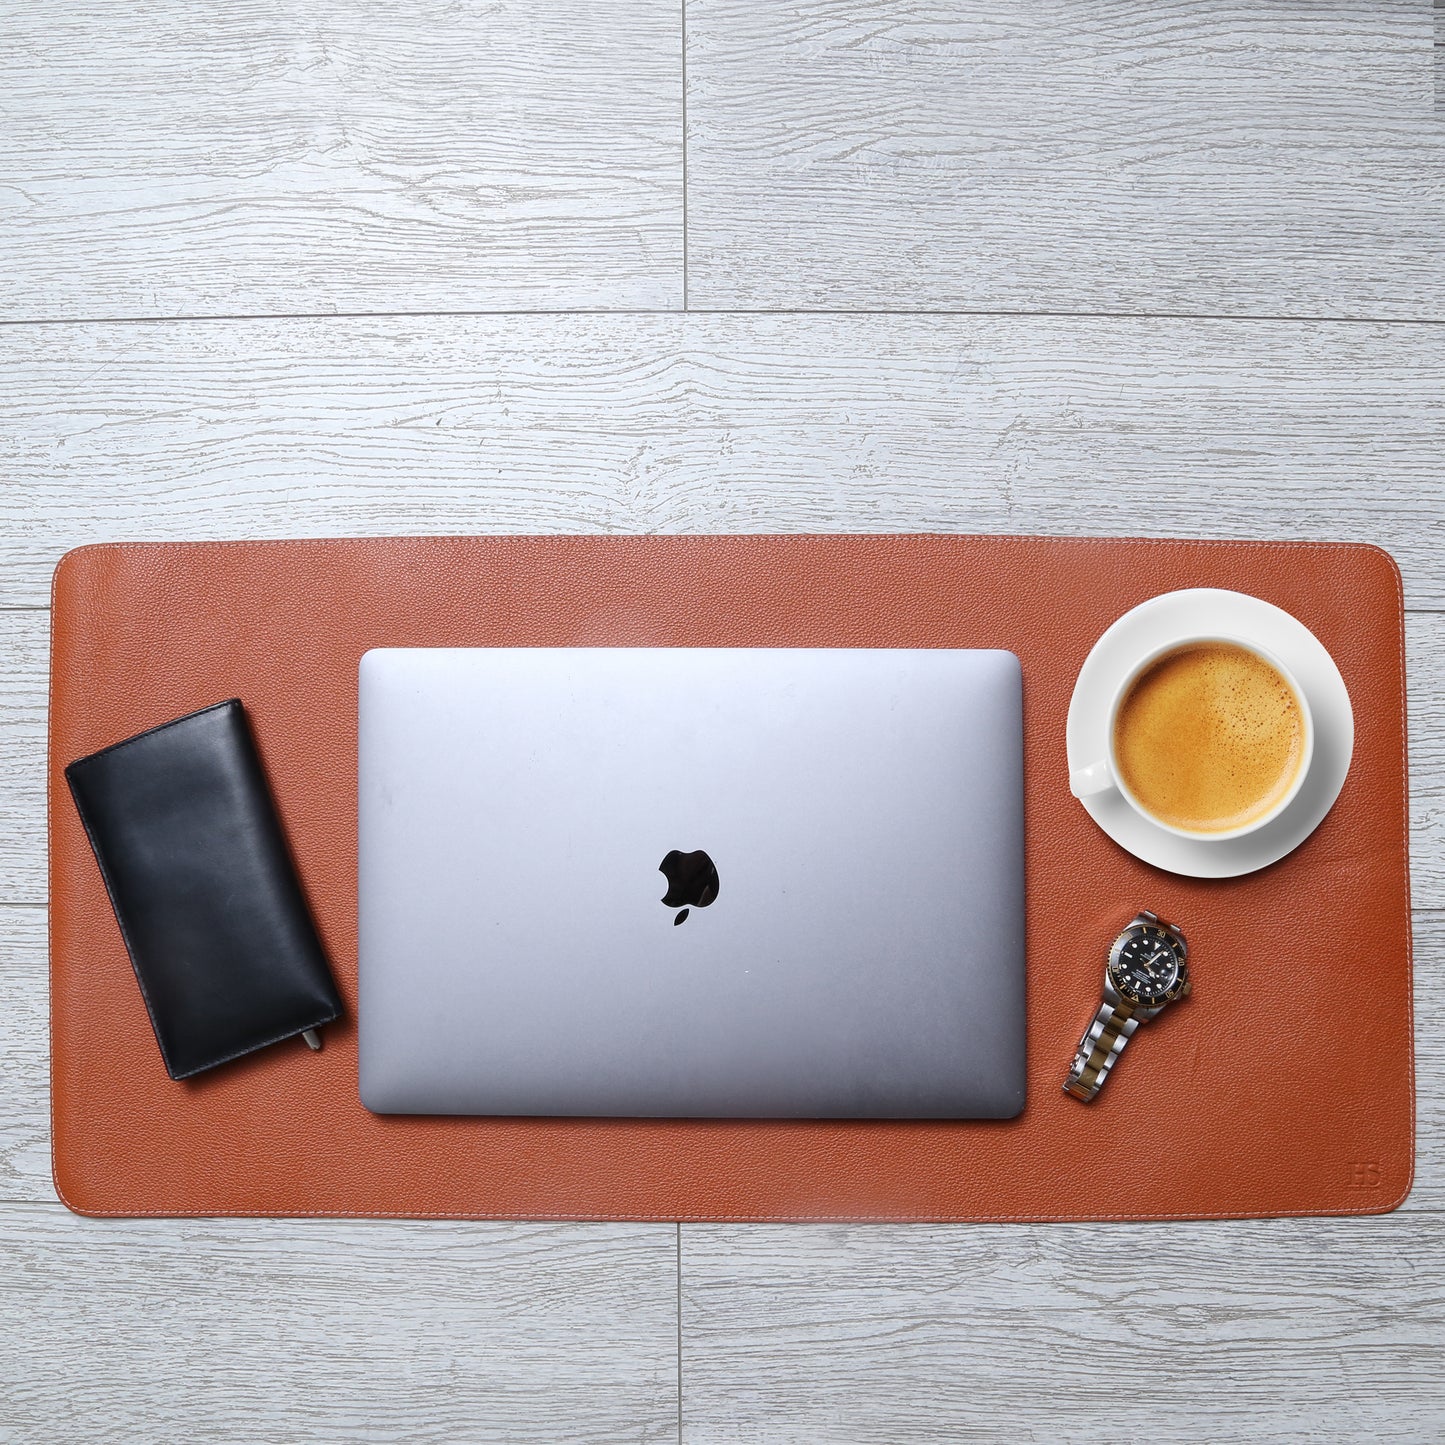 Leather Desk & Laptop Mat (Tan Orange)